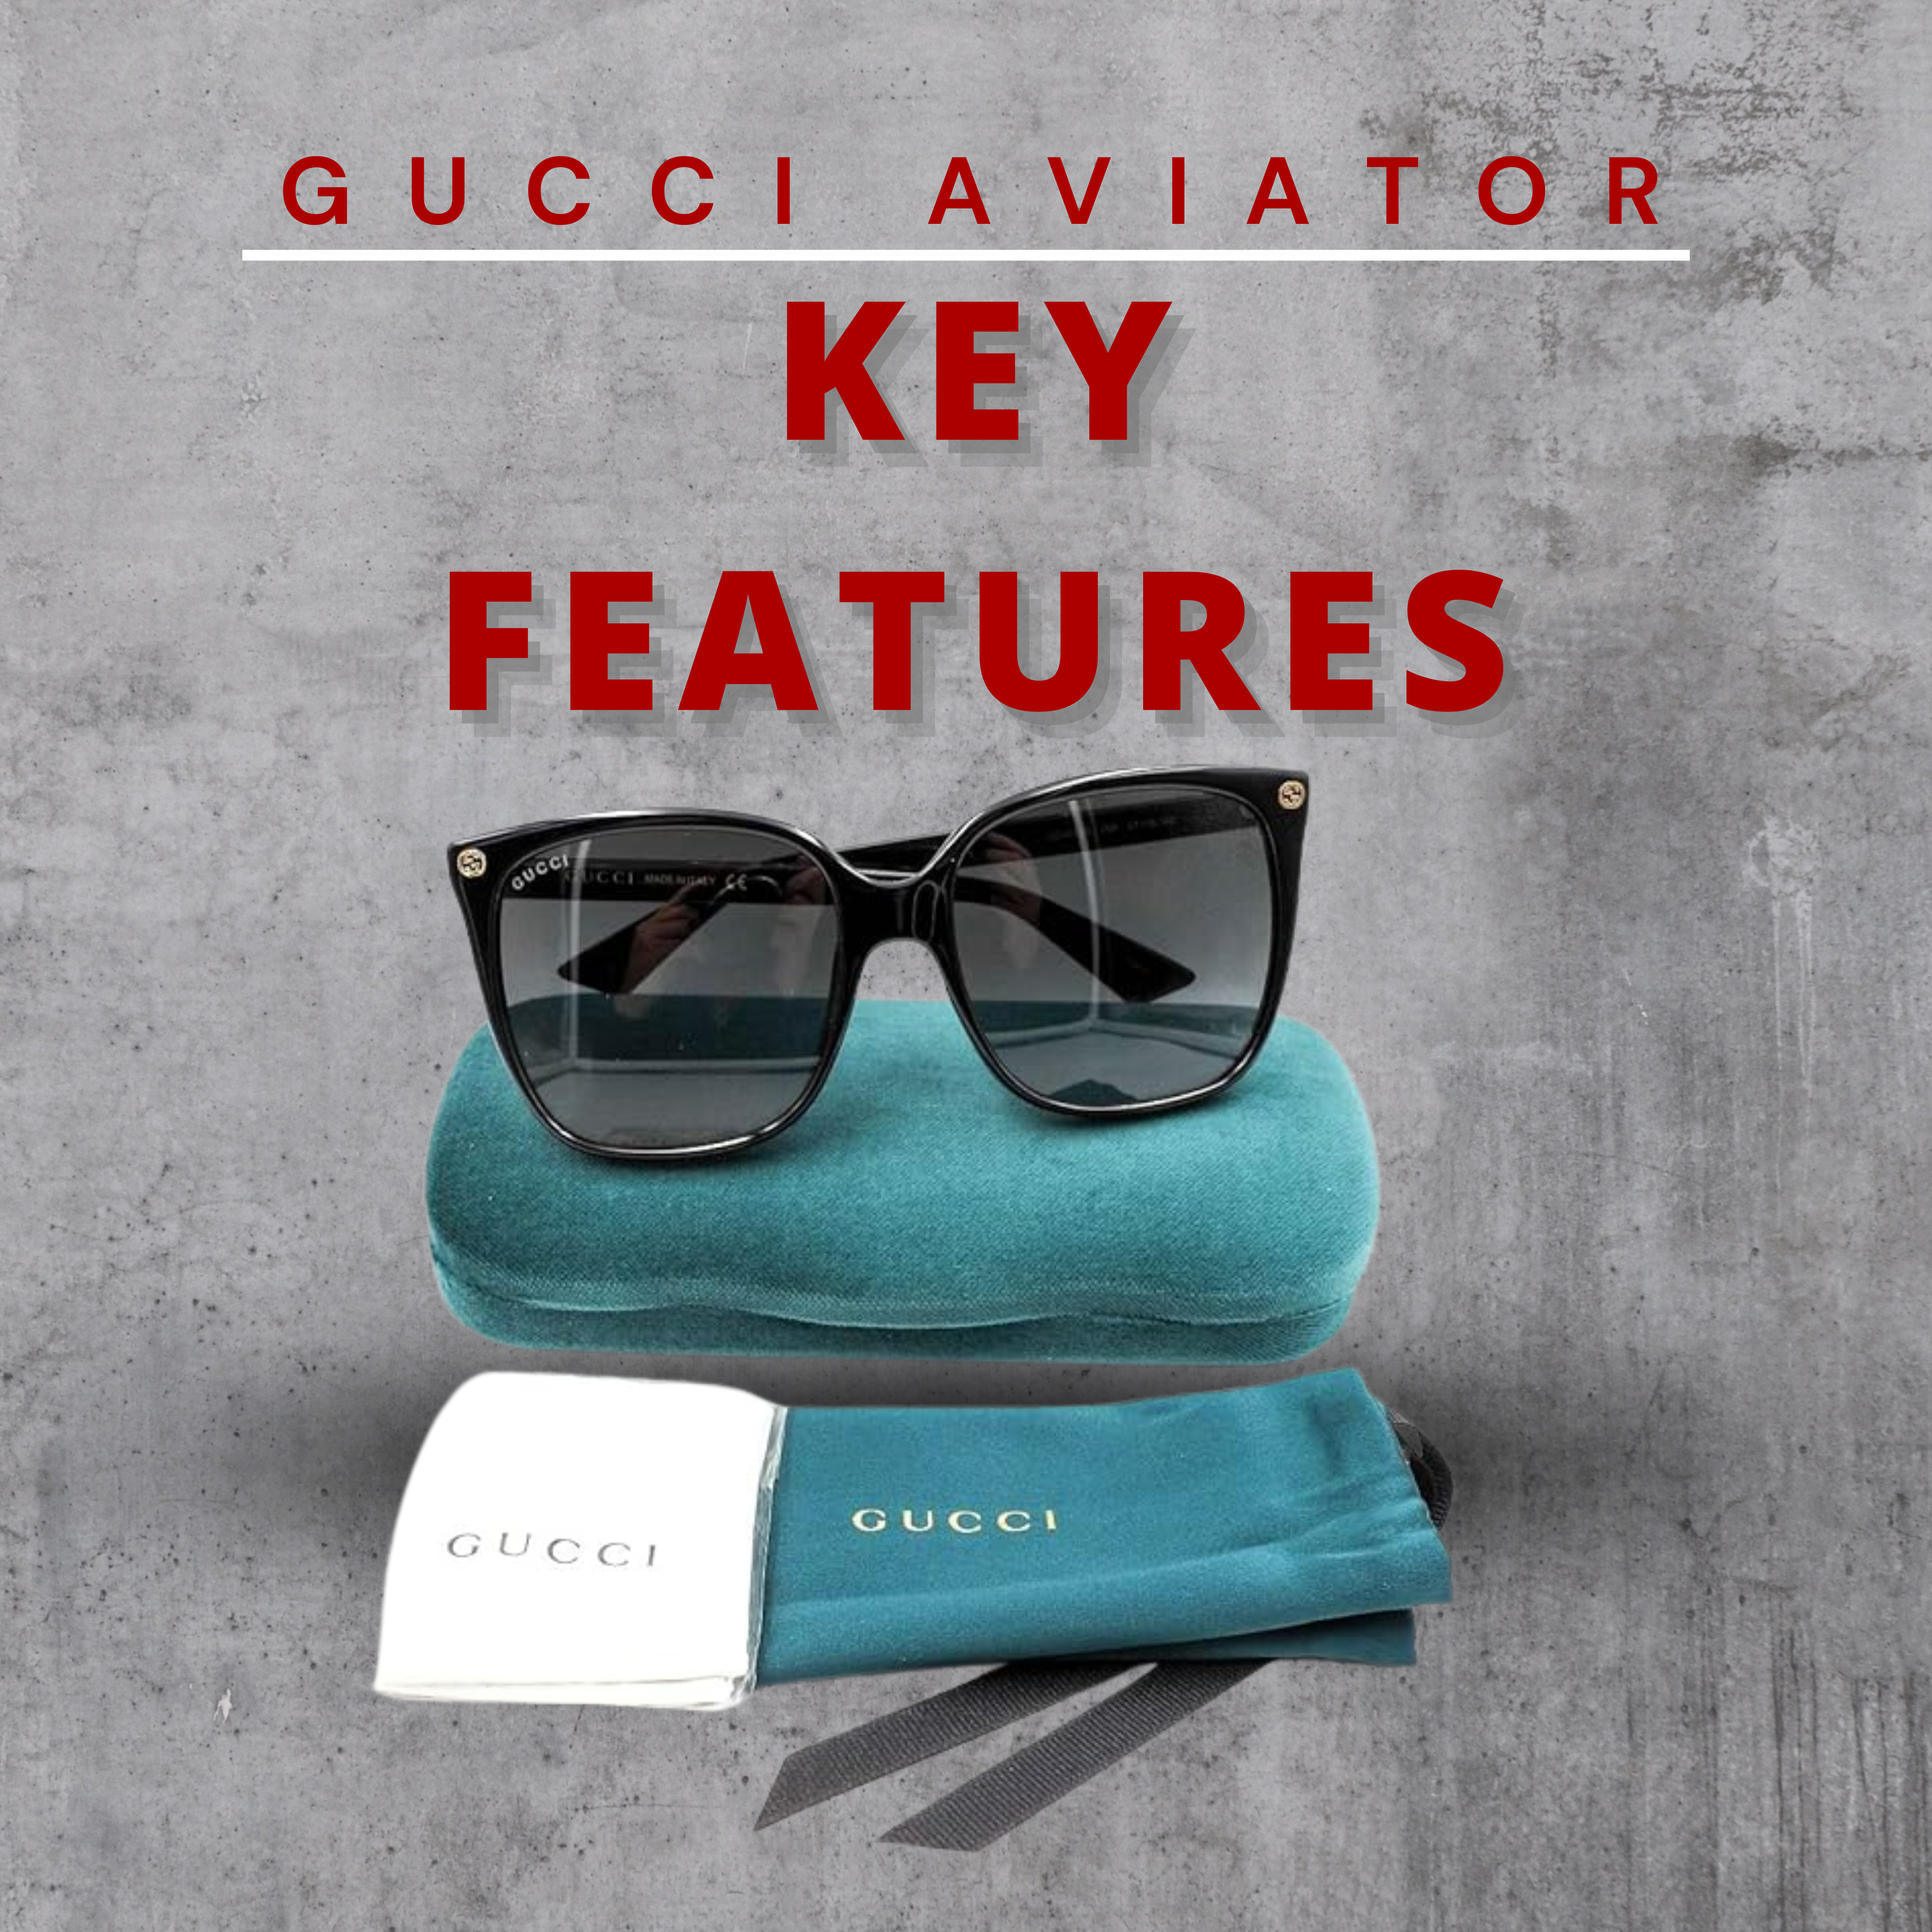 Gucci Aviator Shades for Women